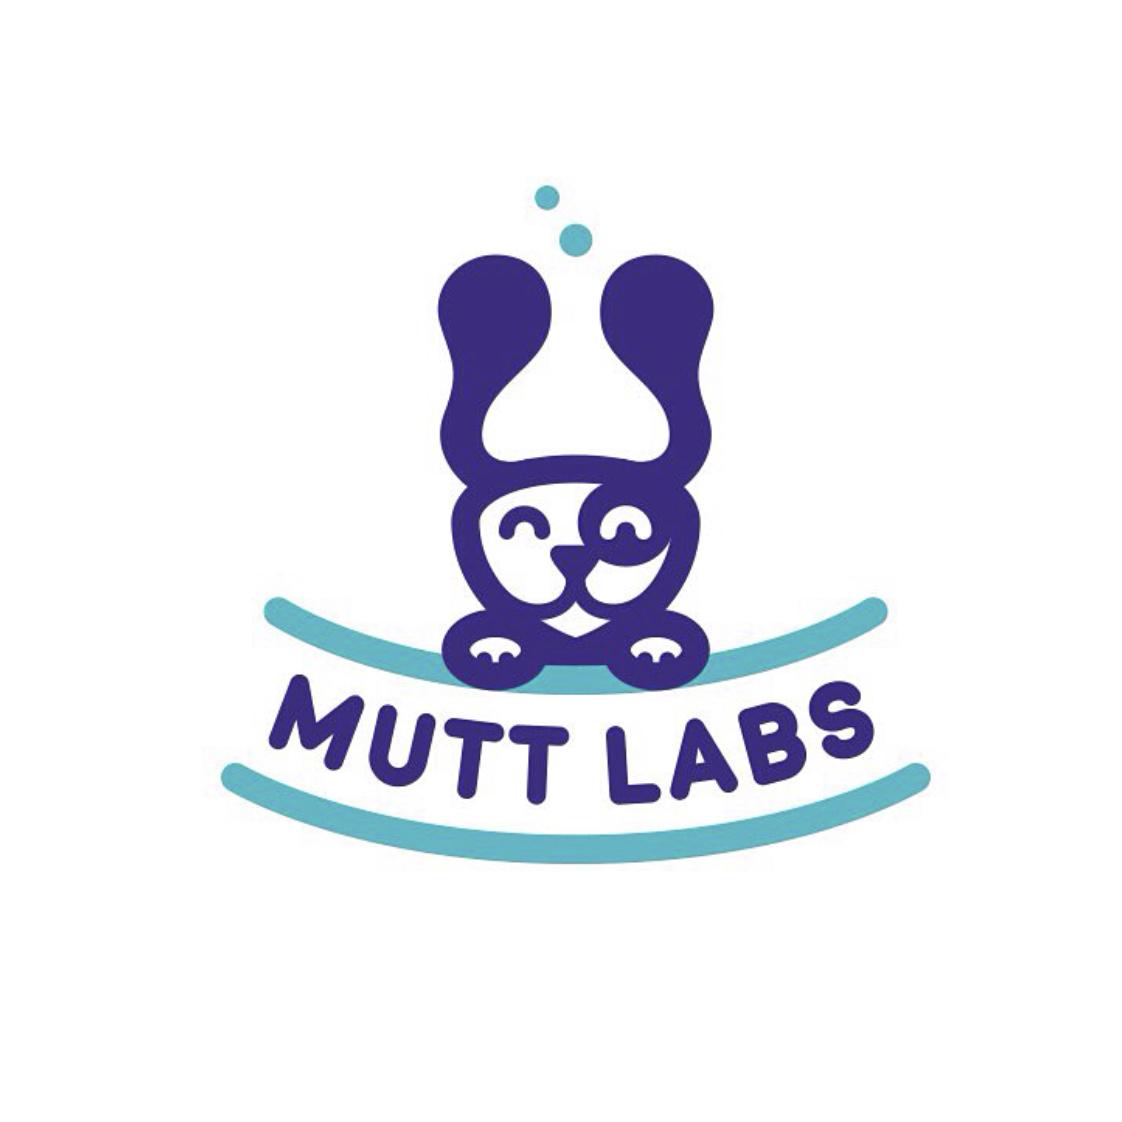 MUTT LABS兽医服务商标转让费用买卖交易流程